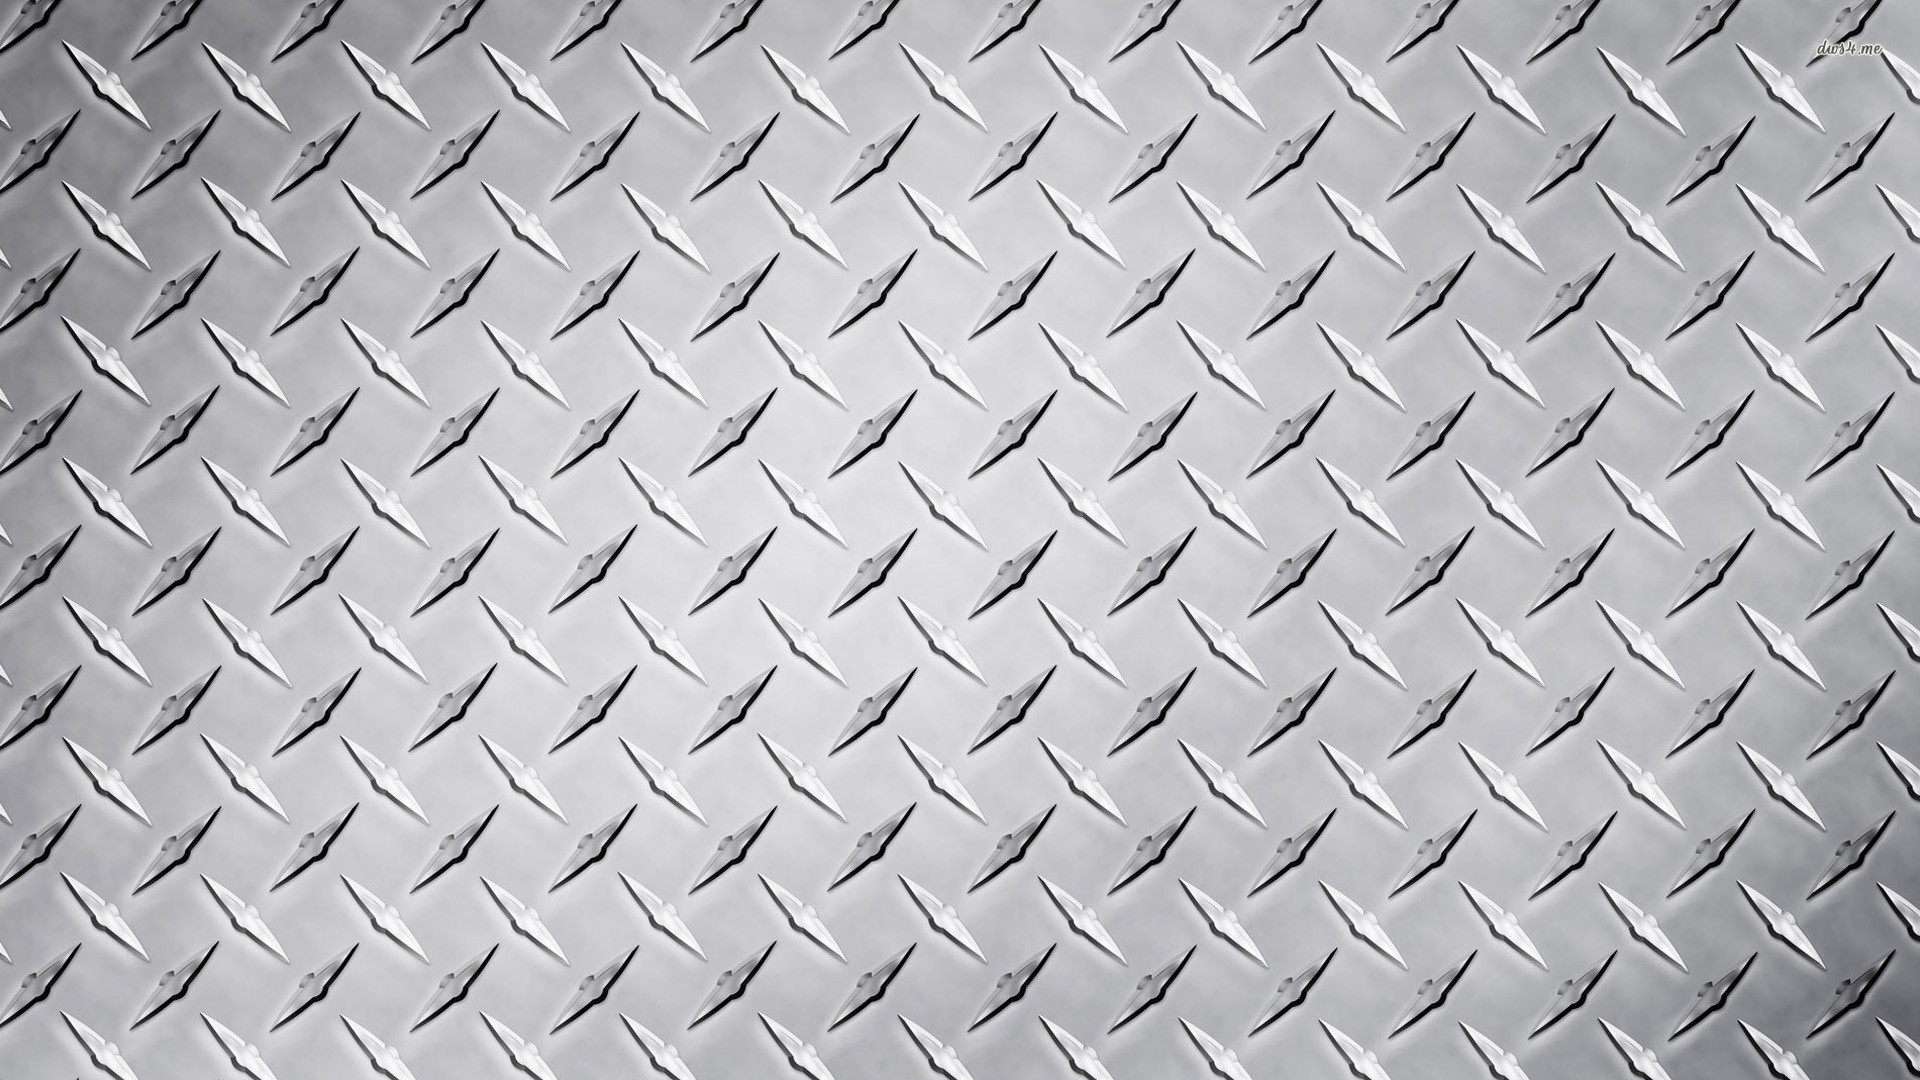 1920x1080 Silver Diamond Plate wallpaper http://deskbg.com/view/30525/